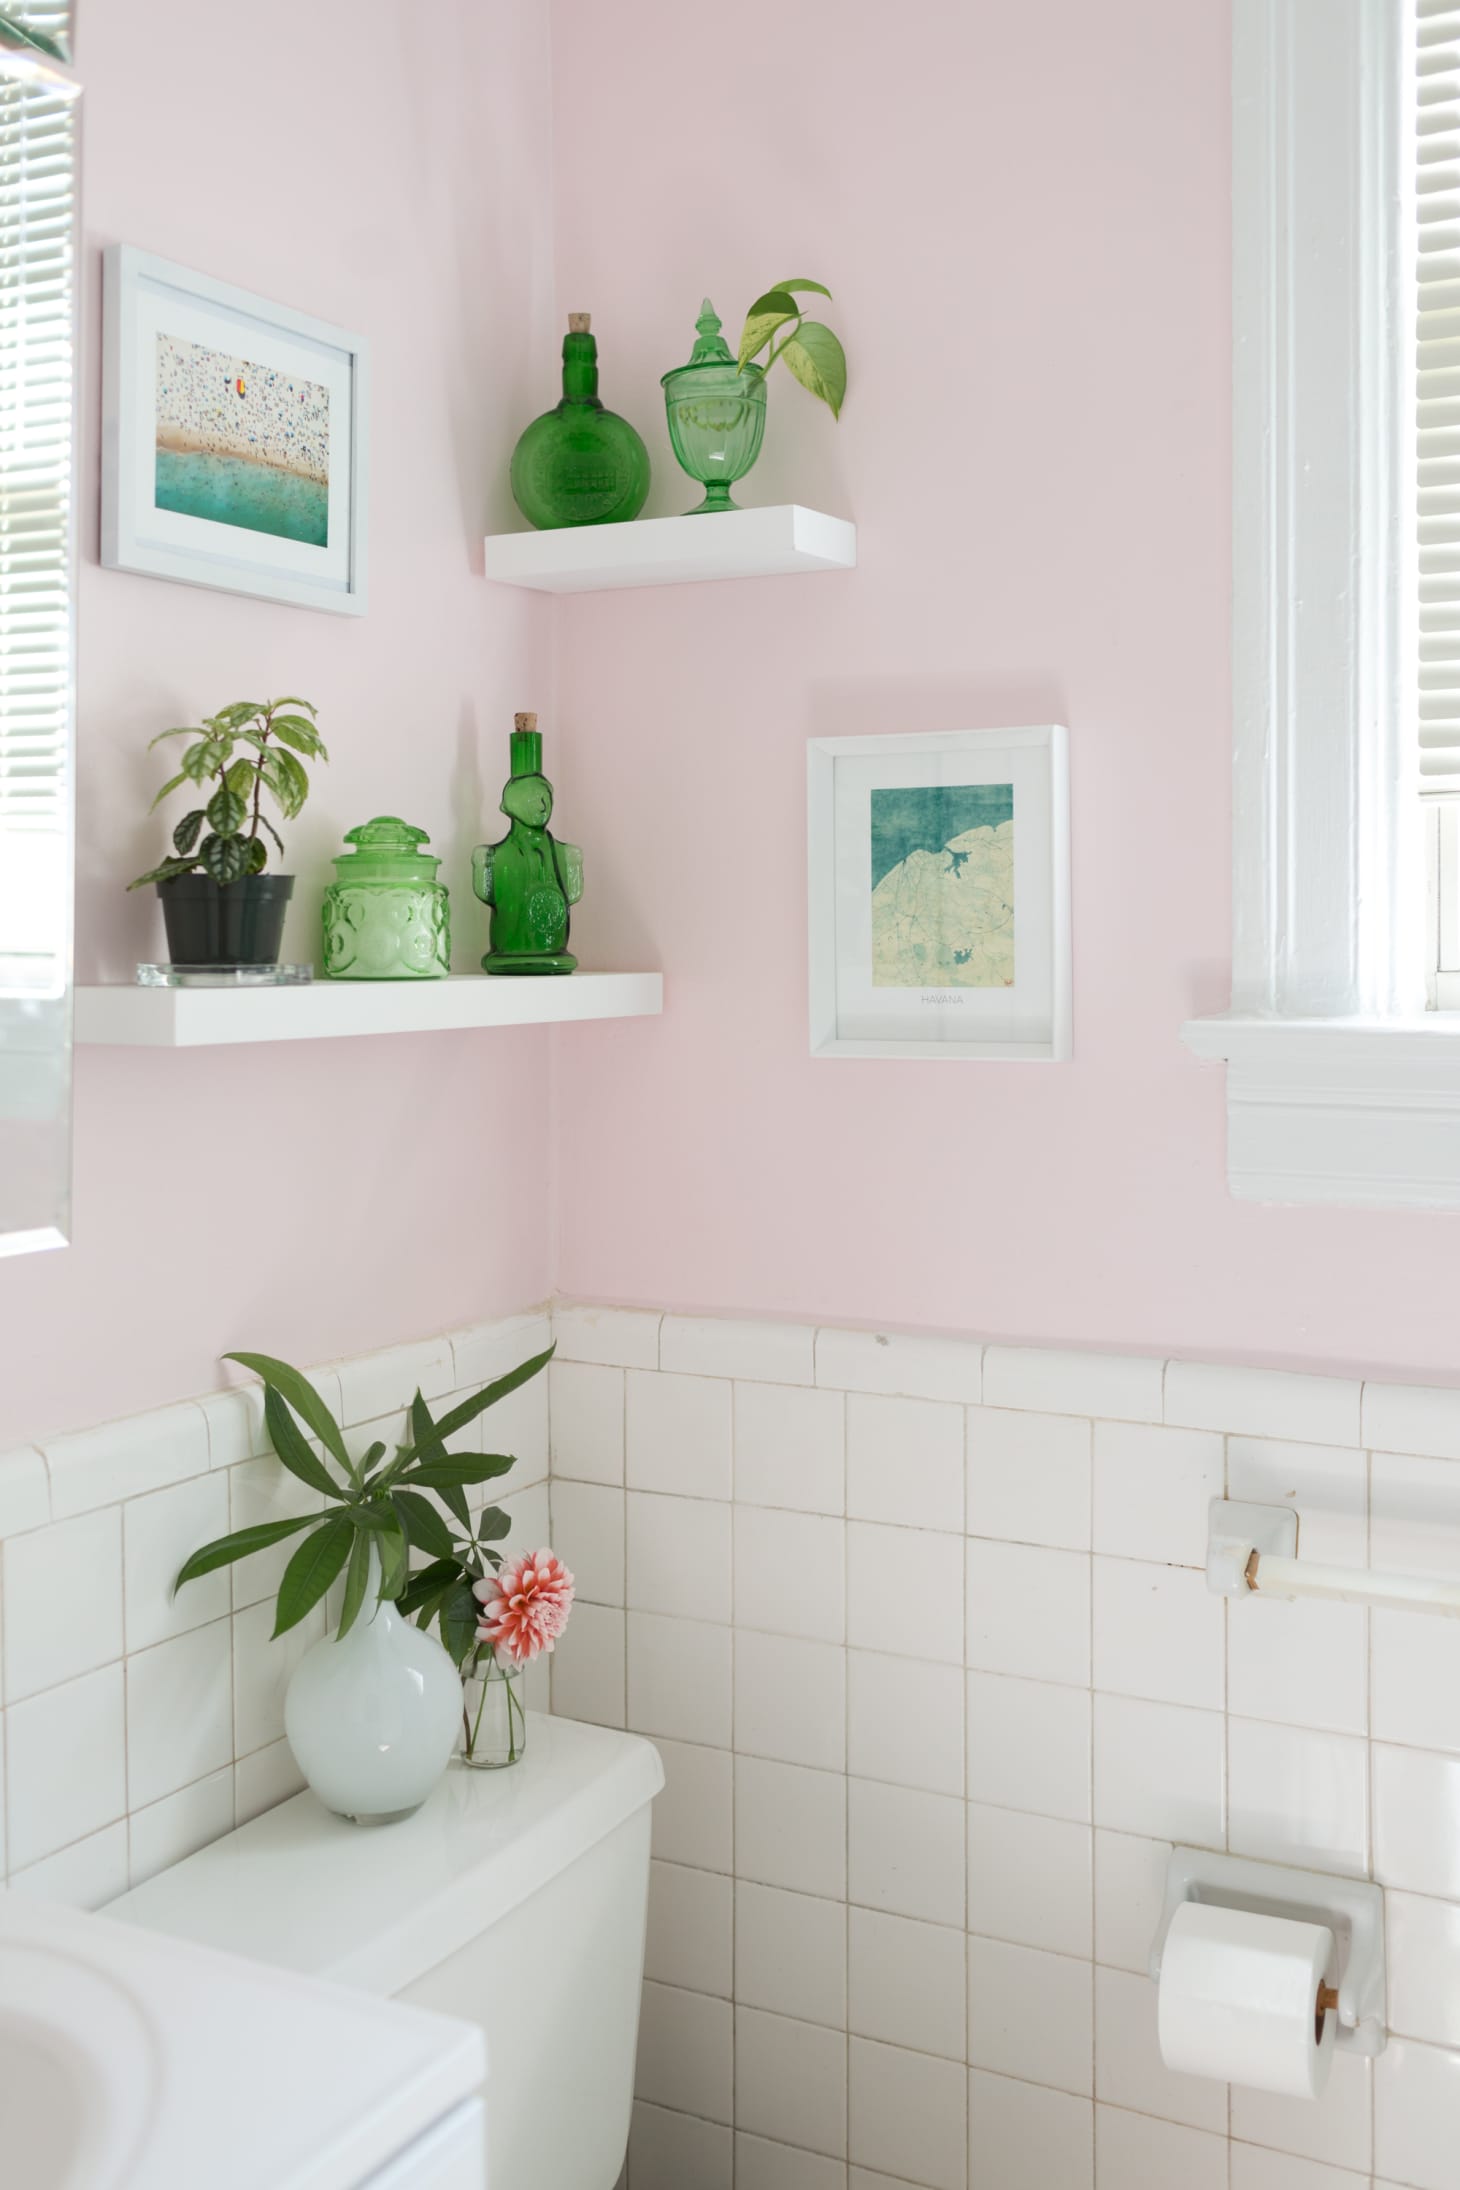 50 Best Small Bathroom Decorating Ideas Tiny Bathroom Layout And Decor